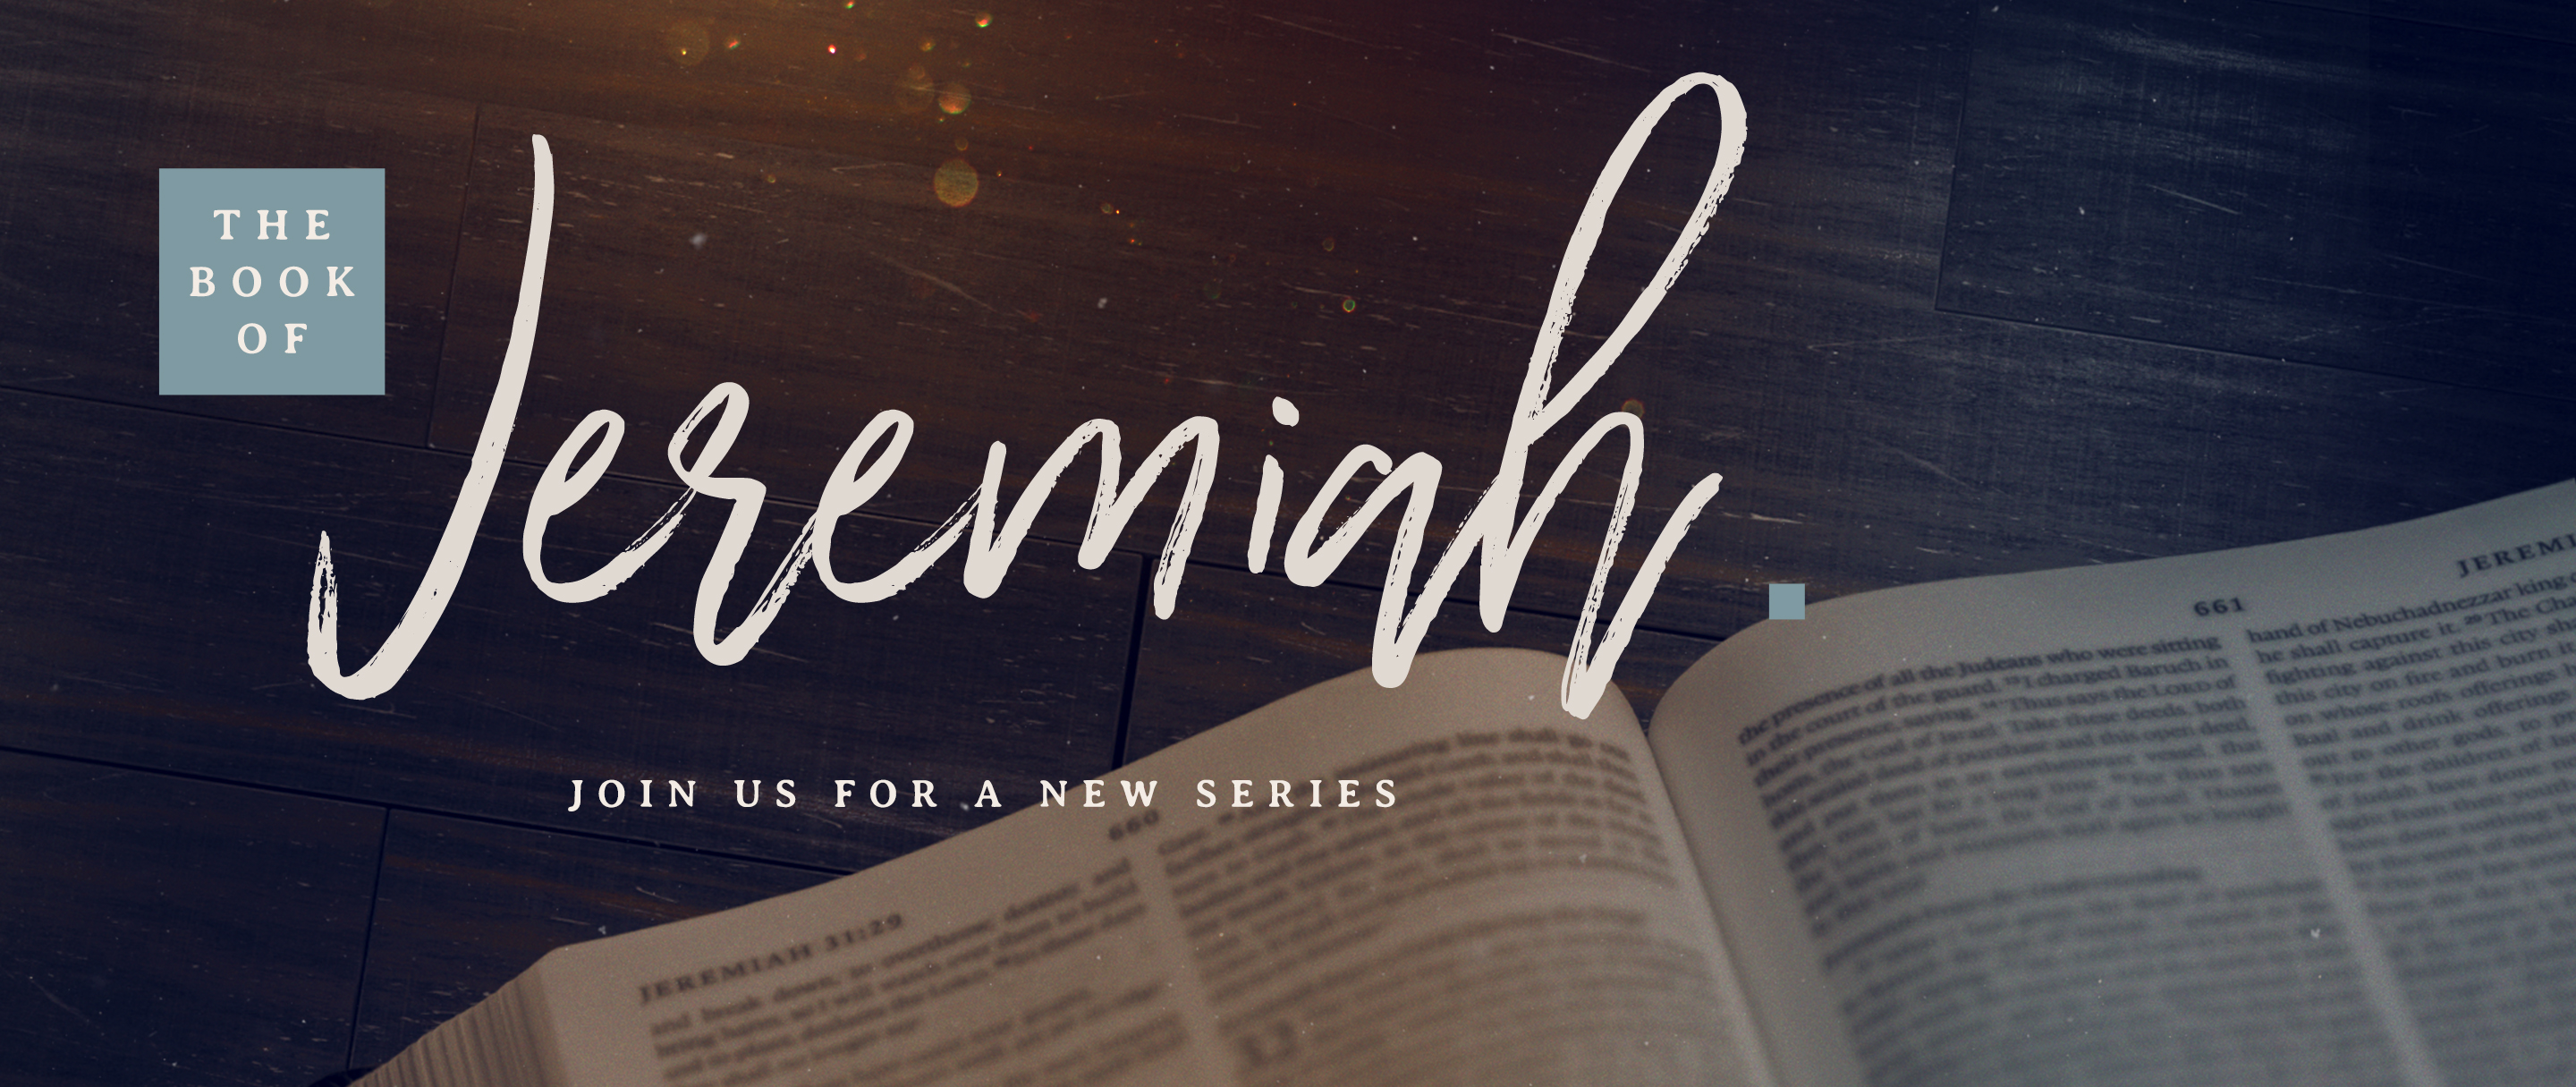 Jeremiah
Sundays at 9:45 AM
New summer series!
